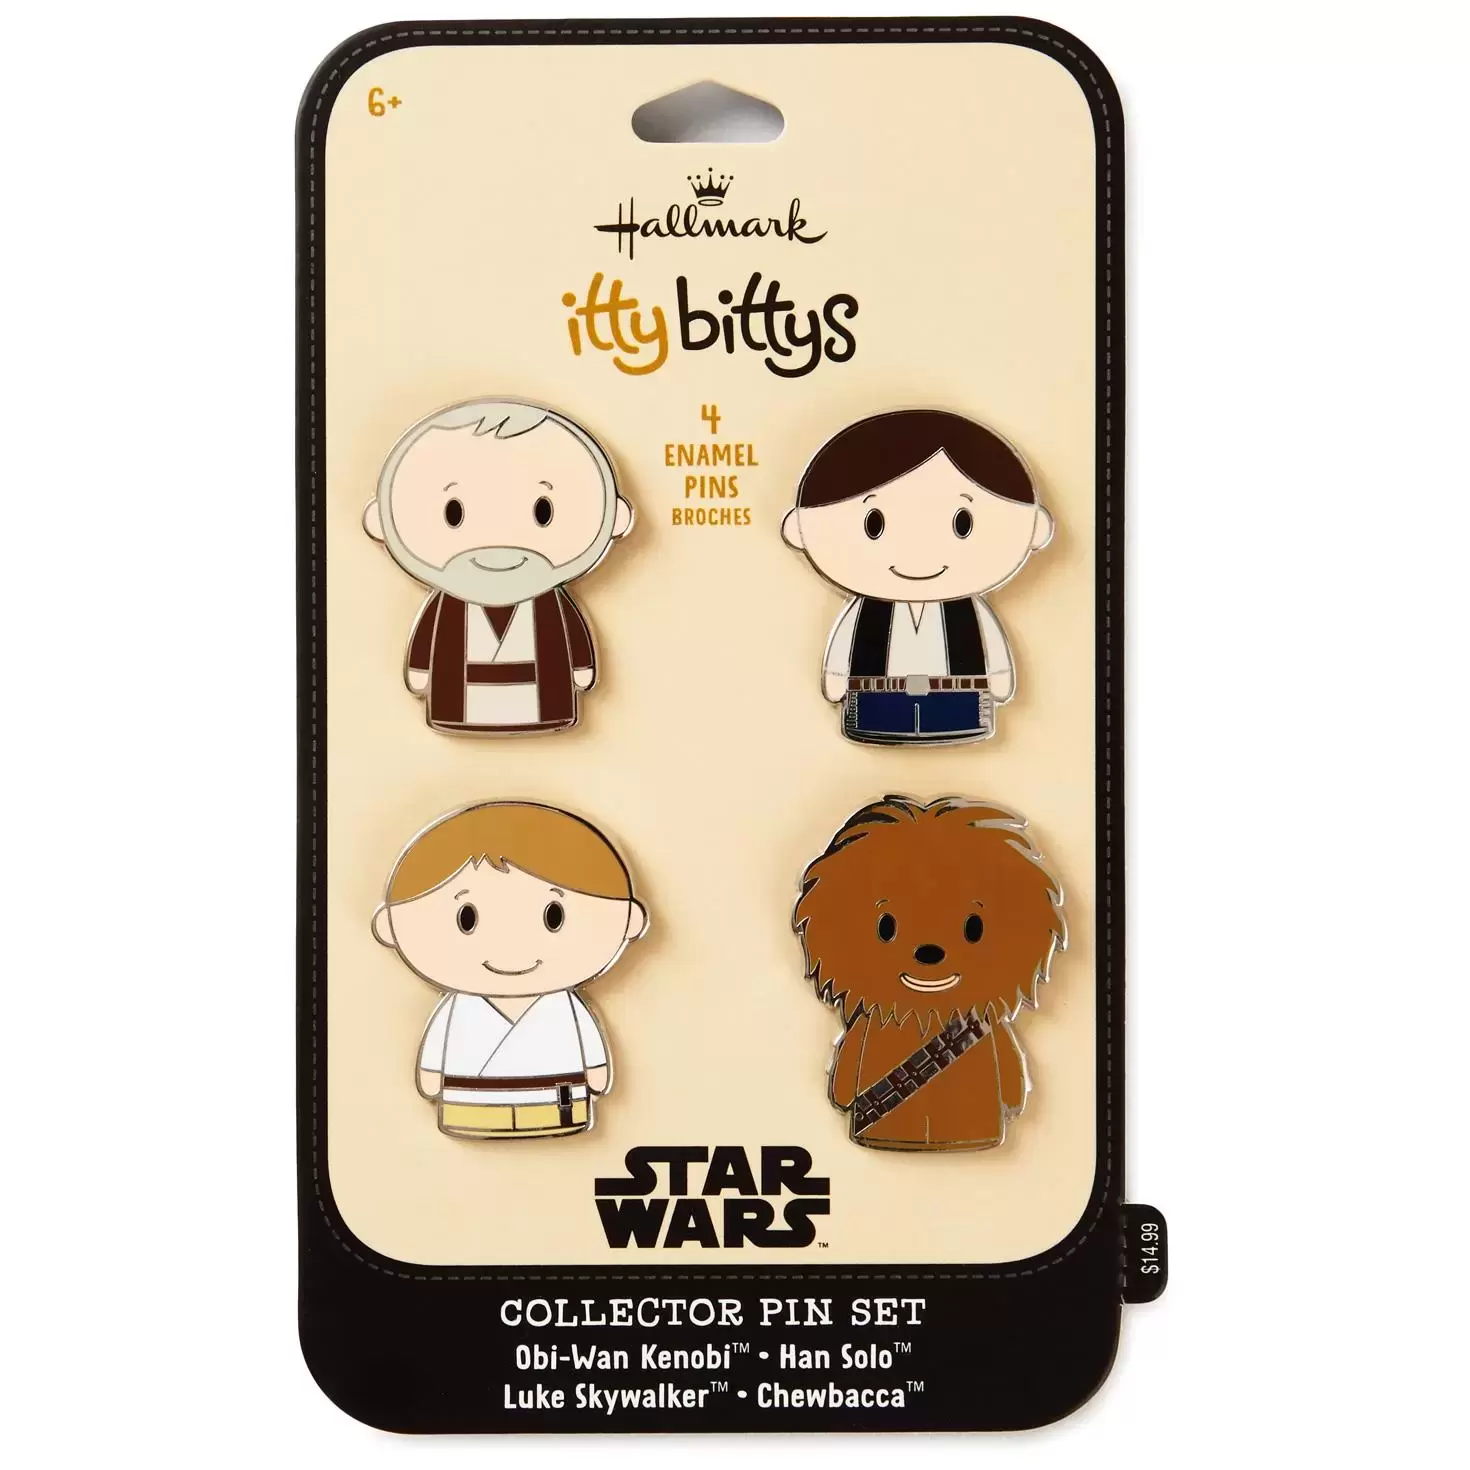 Star Wars - Star Wars Episode 4 Collector Pin Set